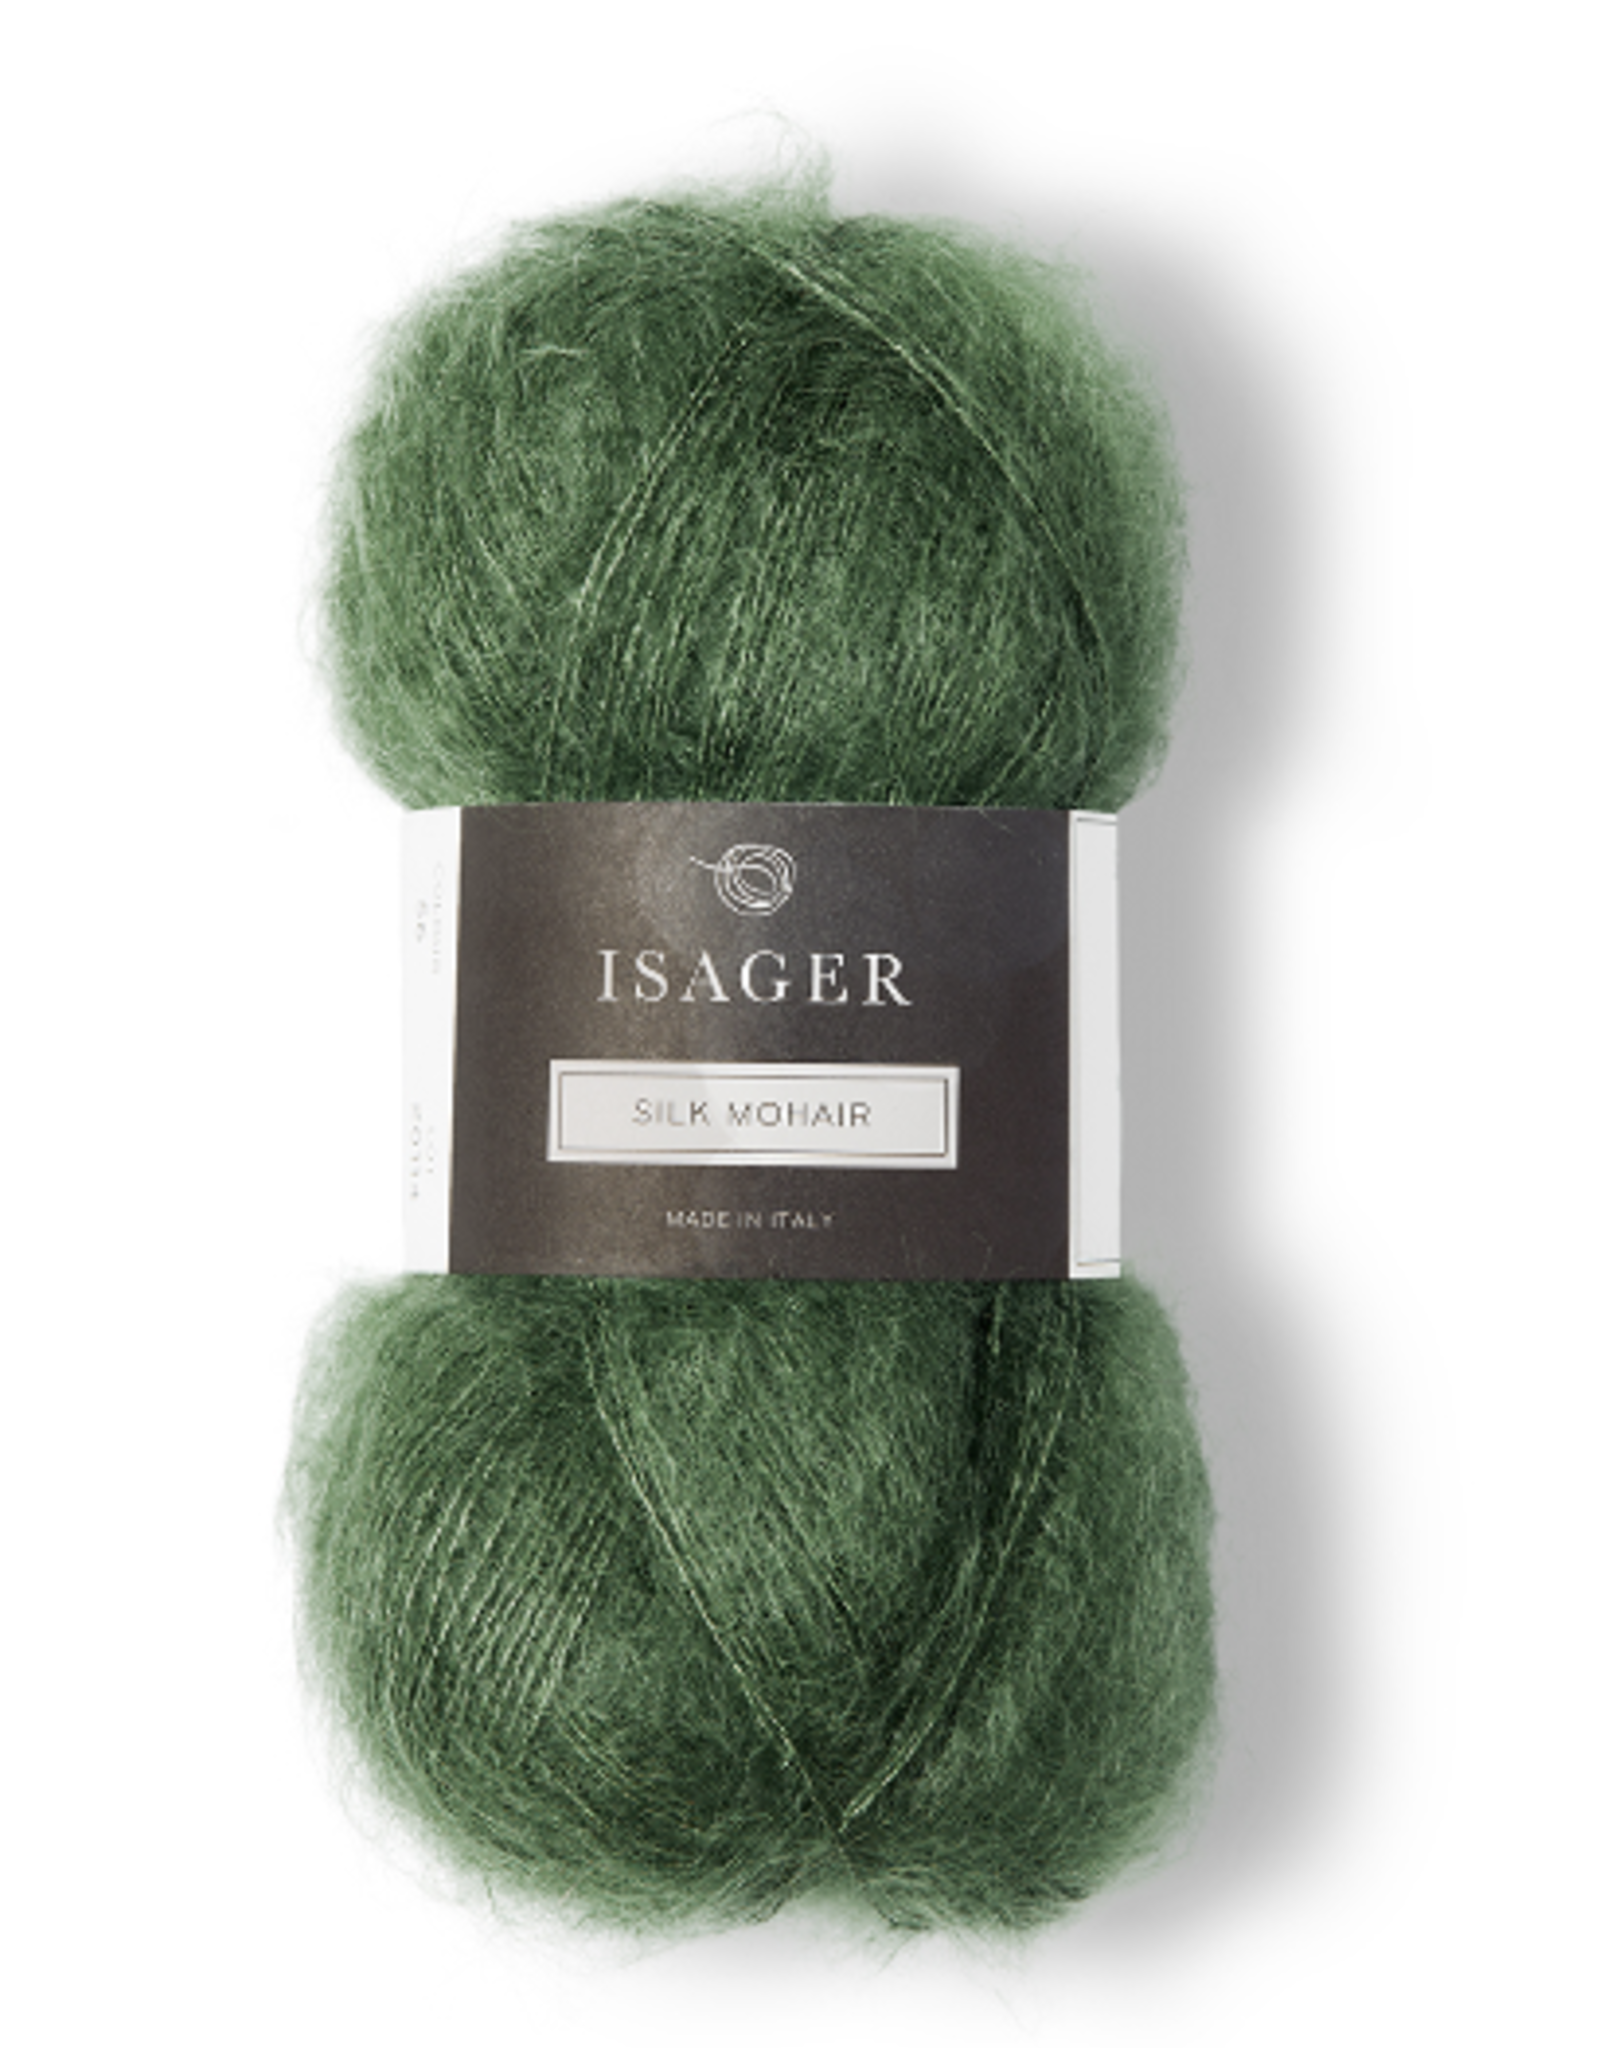 Silk 56 dark green - The Blue Purl Yarn and Knitting Shop